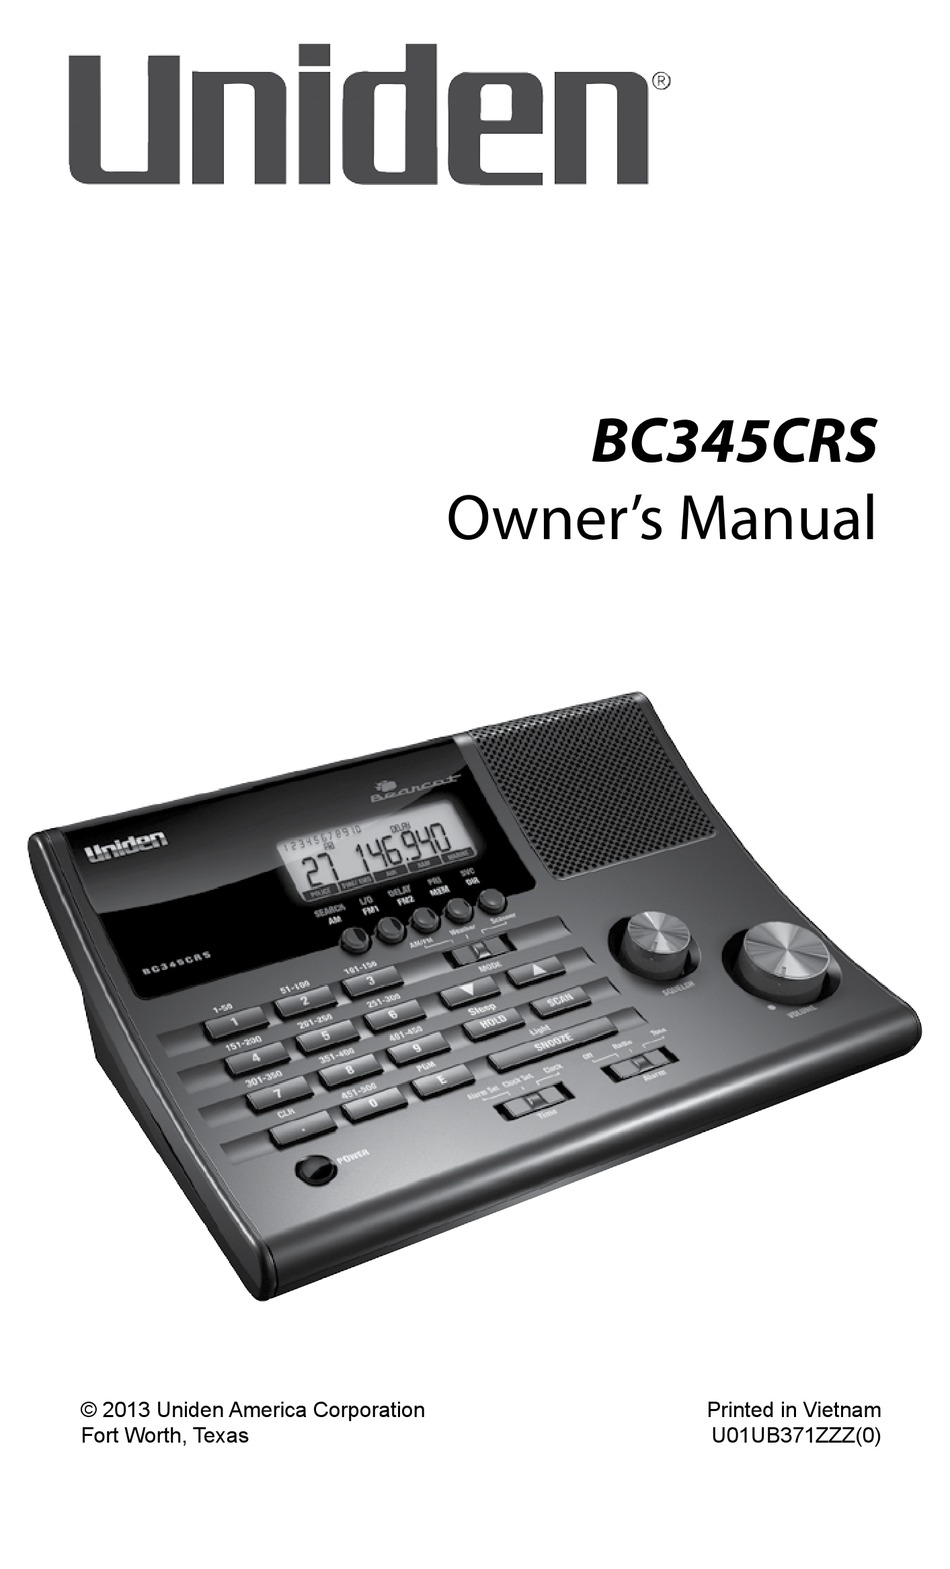 UNIDEN BC345CRS OWNER'S MANUAL Pdf Download | ManualsLib